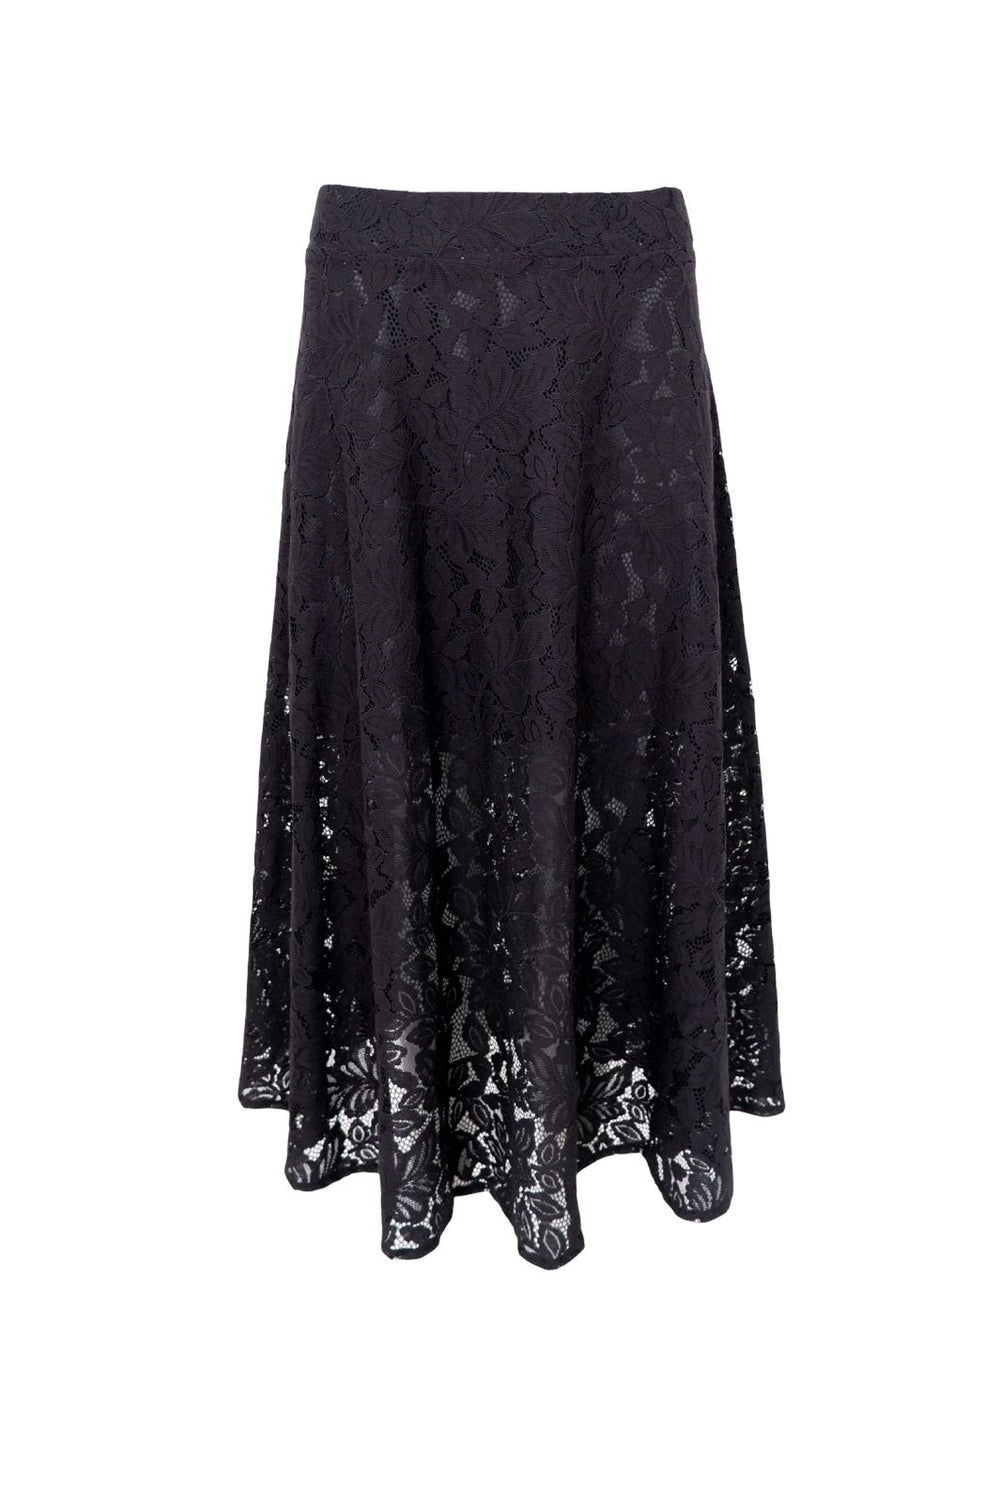 Black Colour - Bcjones Lace Skirt - Black